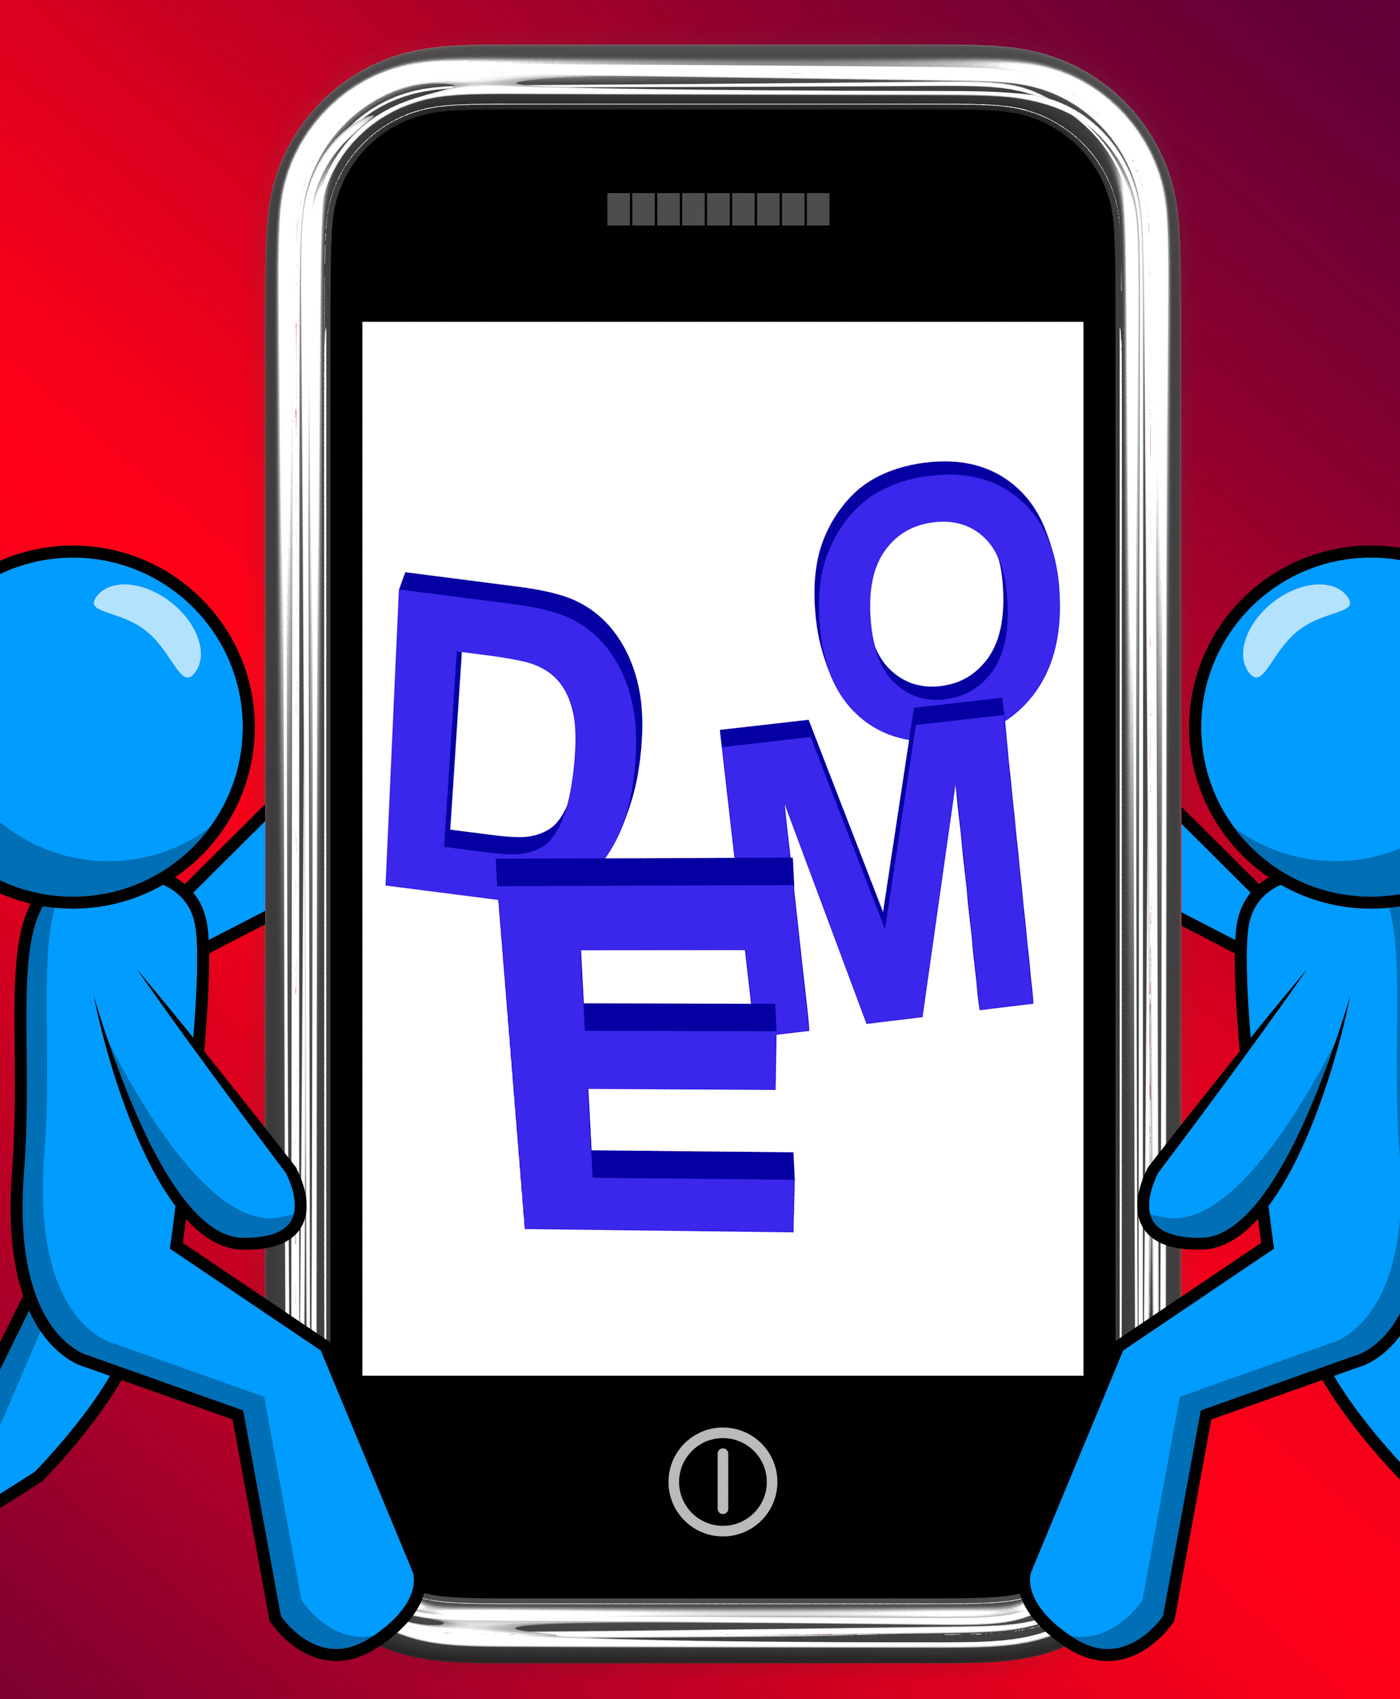 Demo on phone displays development or beta version photo